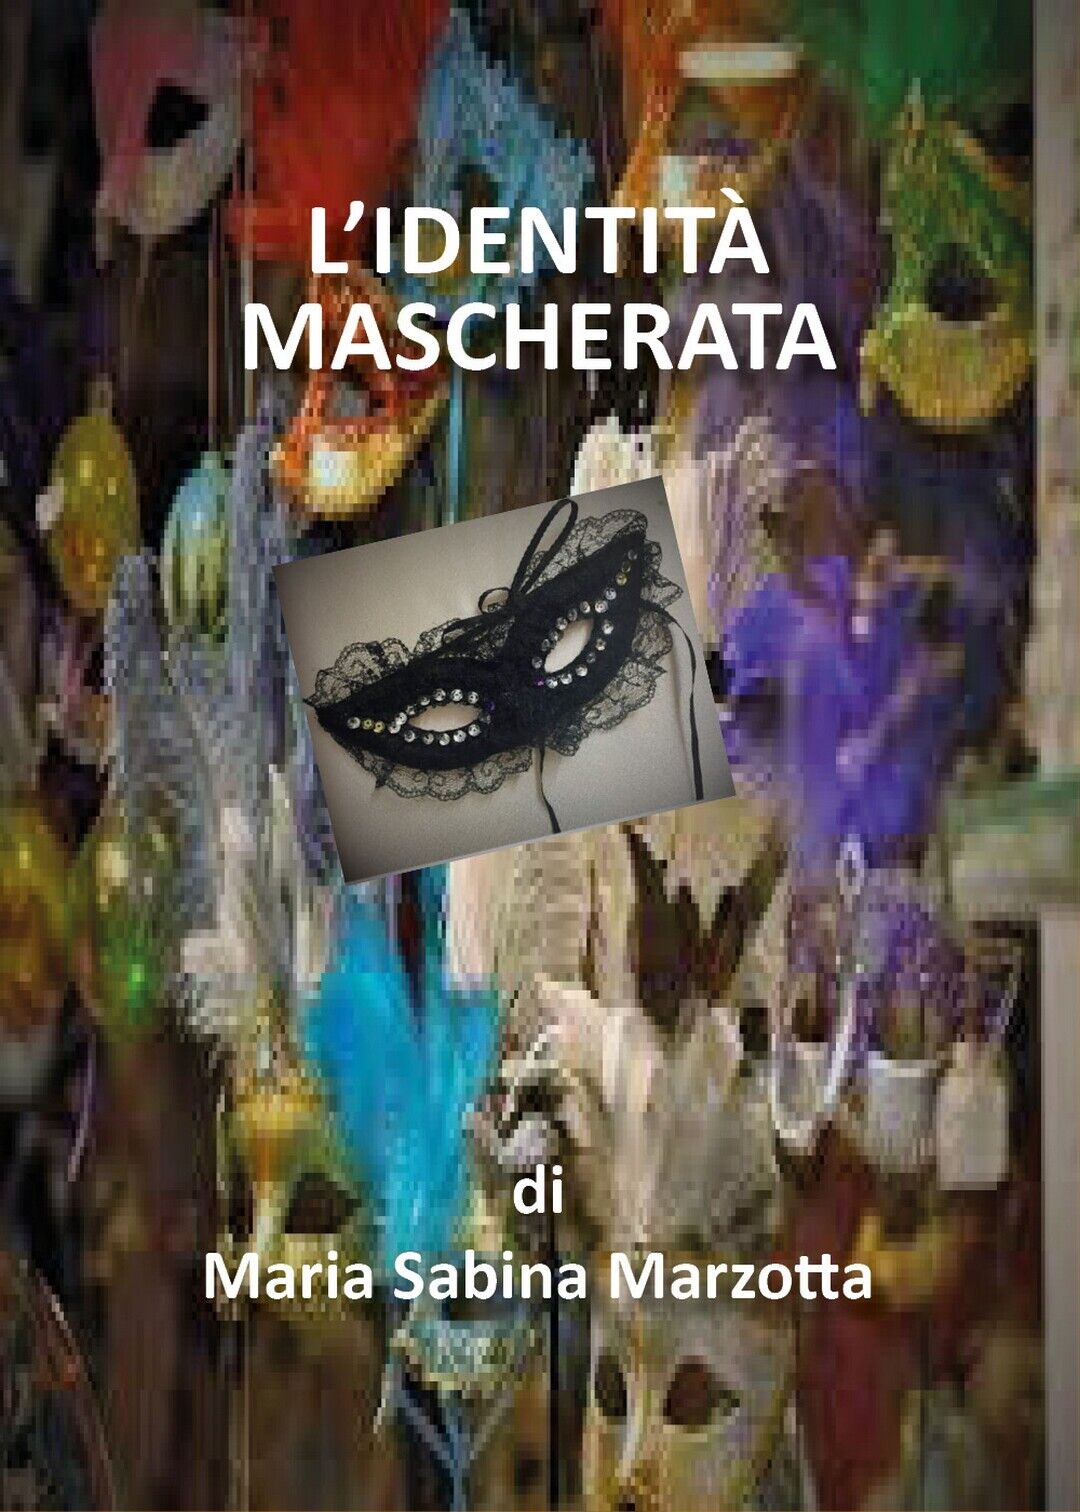 L'identit? mascherata  di Maria Sabina Marzotta,  2018,  Youcanprint